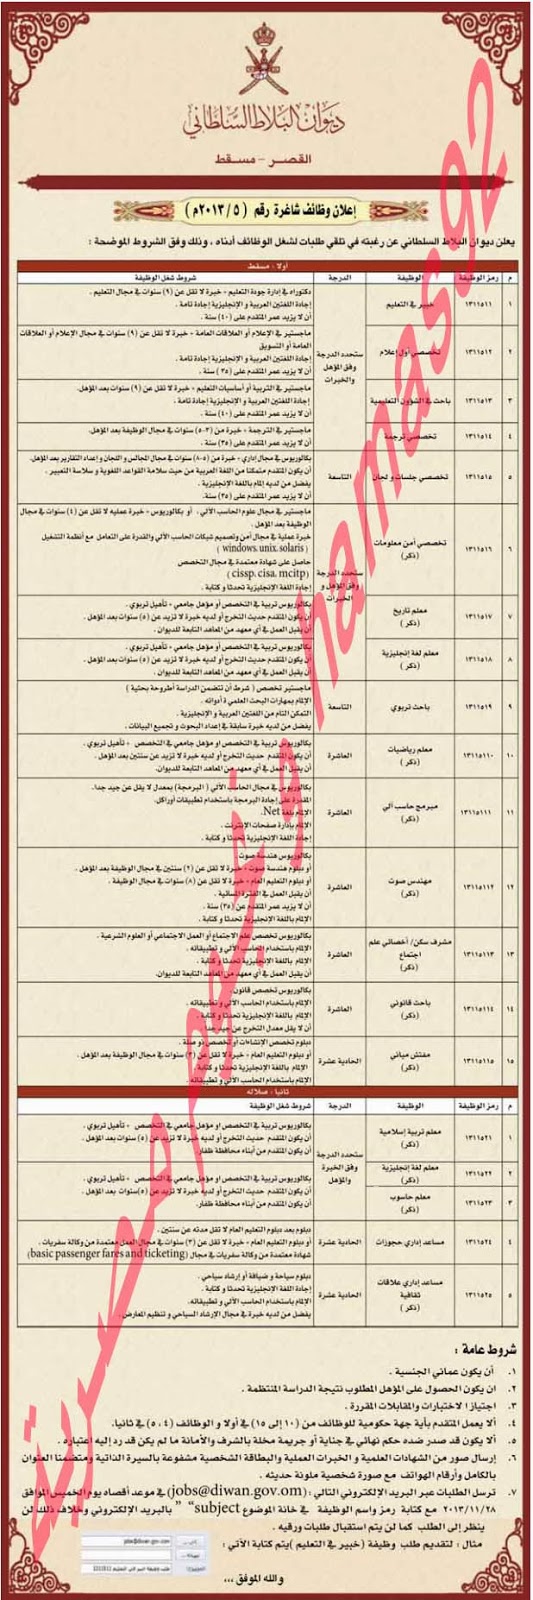 وظائف شاغرة فى جريدة الوطن سلطنة عمان الخميس 21-11-2013 %D8%A7%D9%84%D9%88%D8%B7%D9%86+%D8%B9%D9%85%D8%A7%D9%86+1